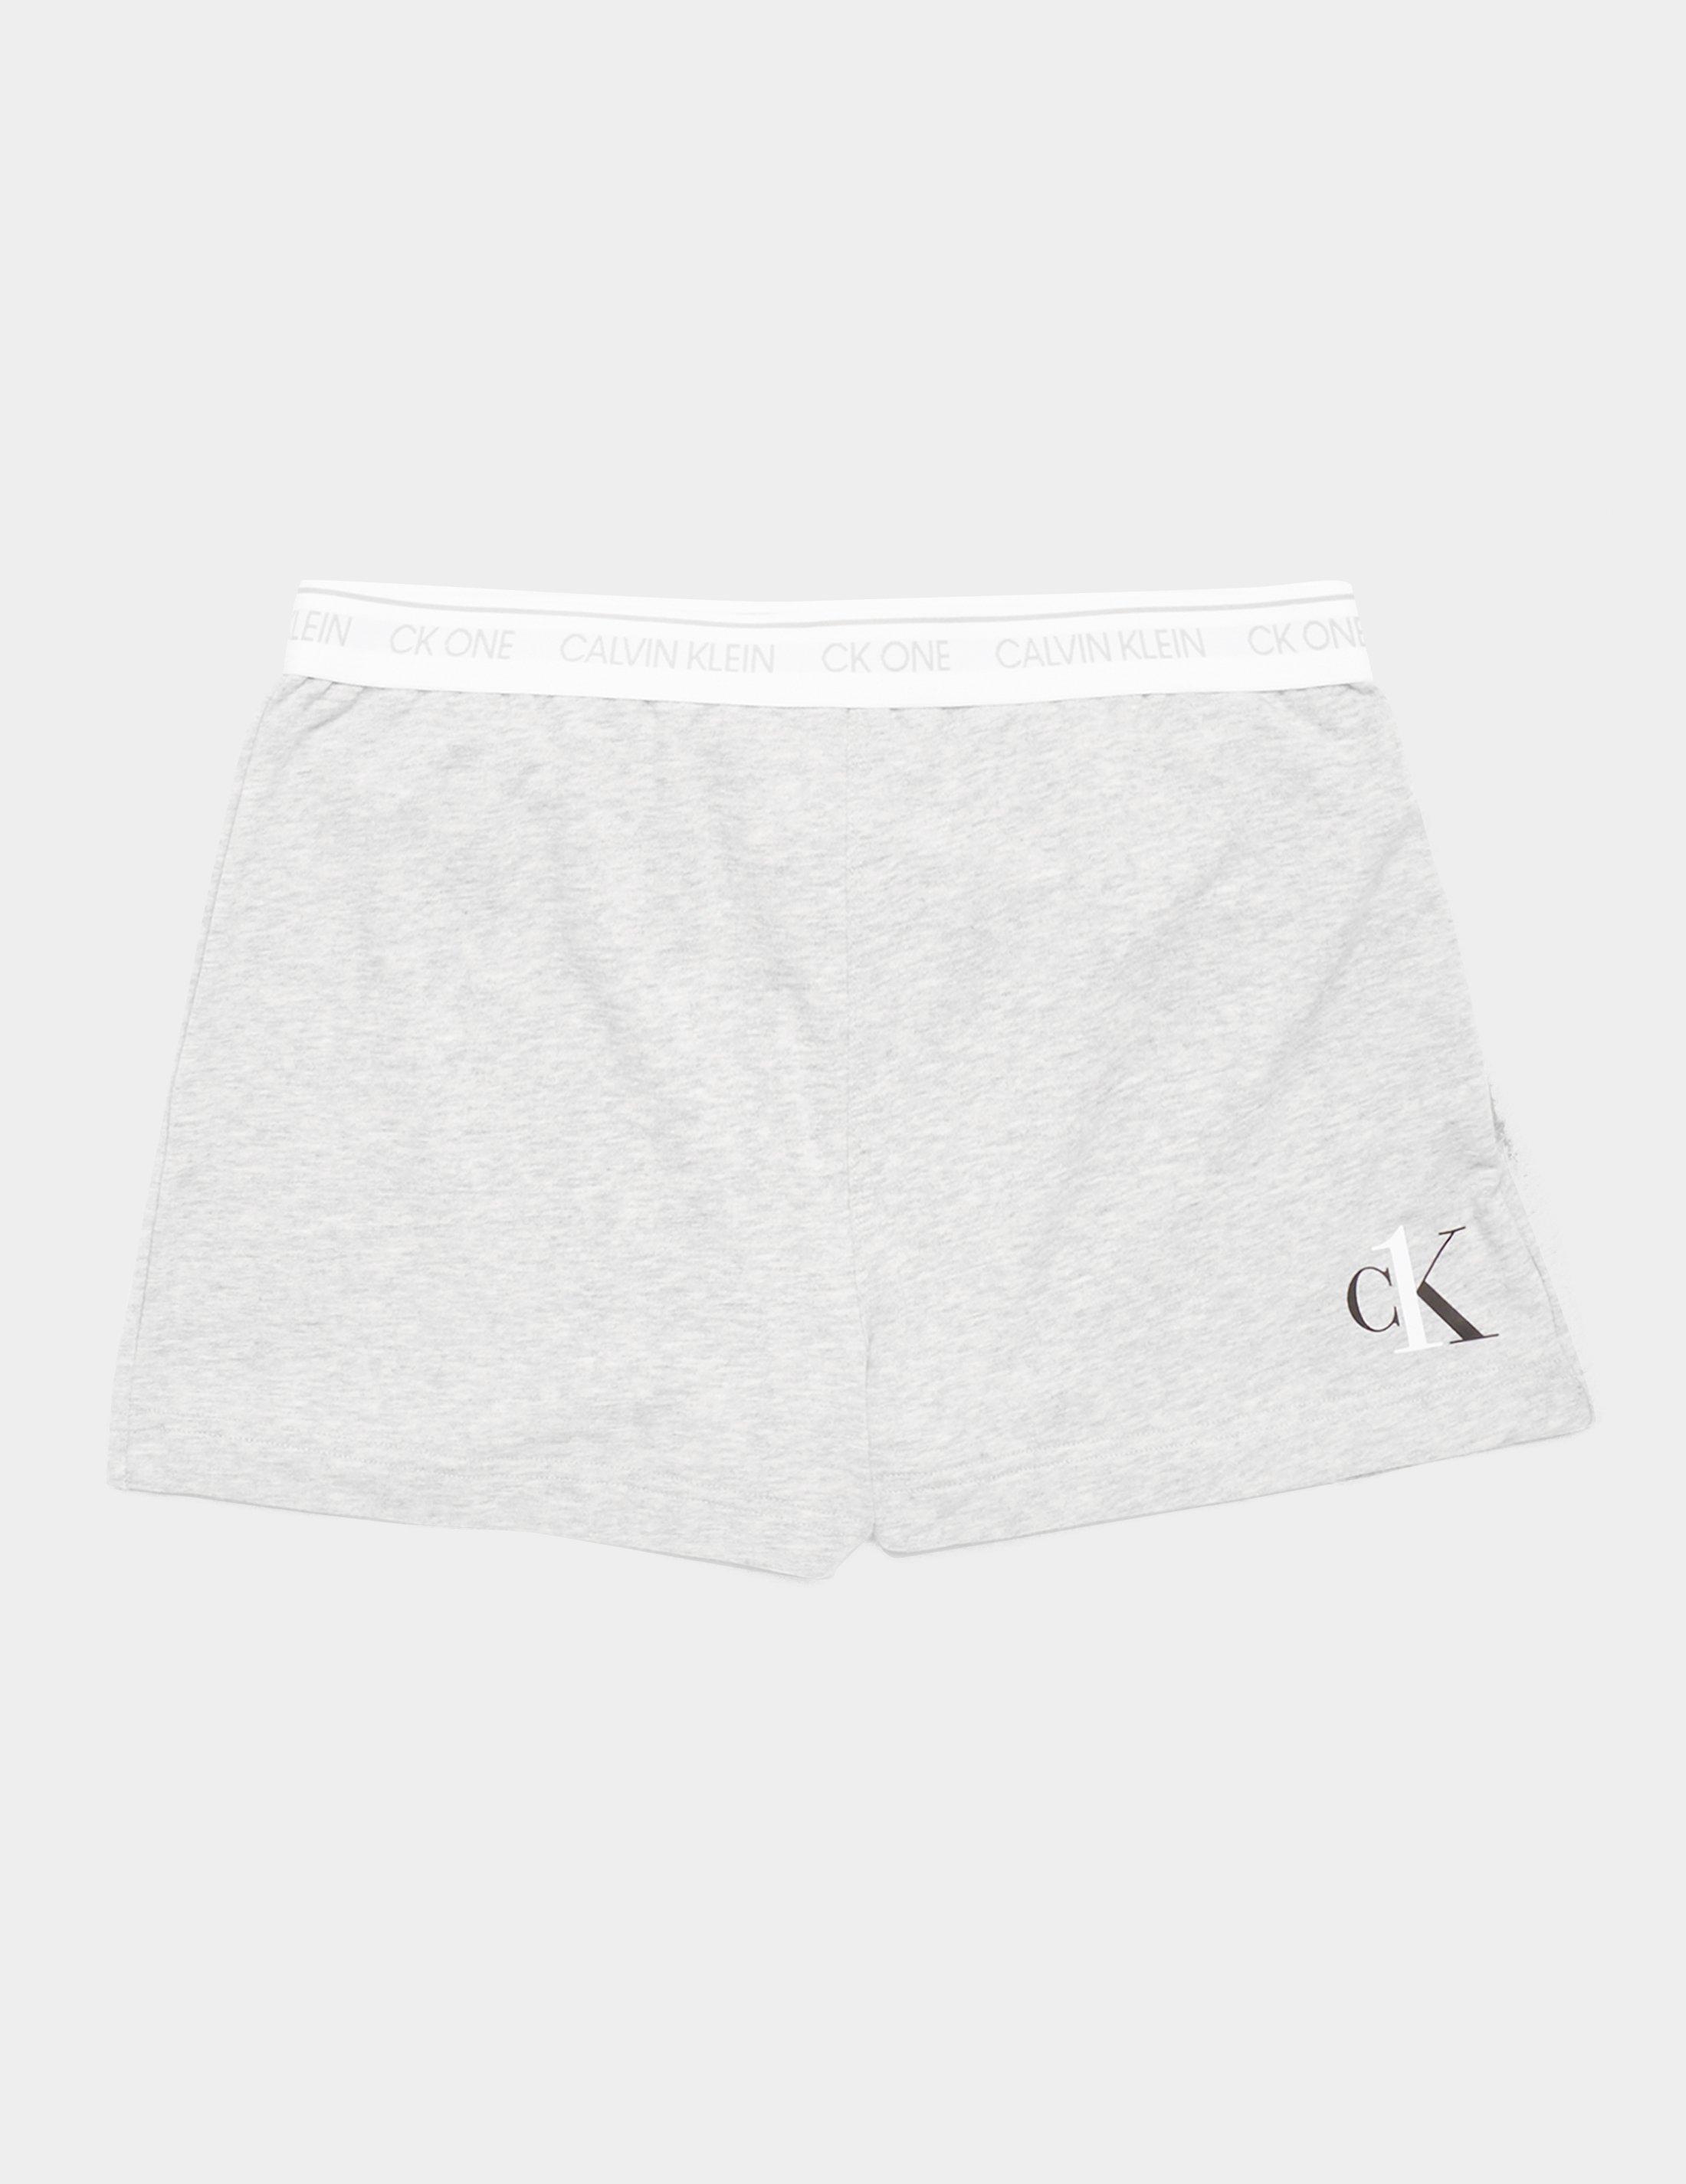 calvin klein grey shorts womens